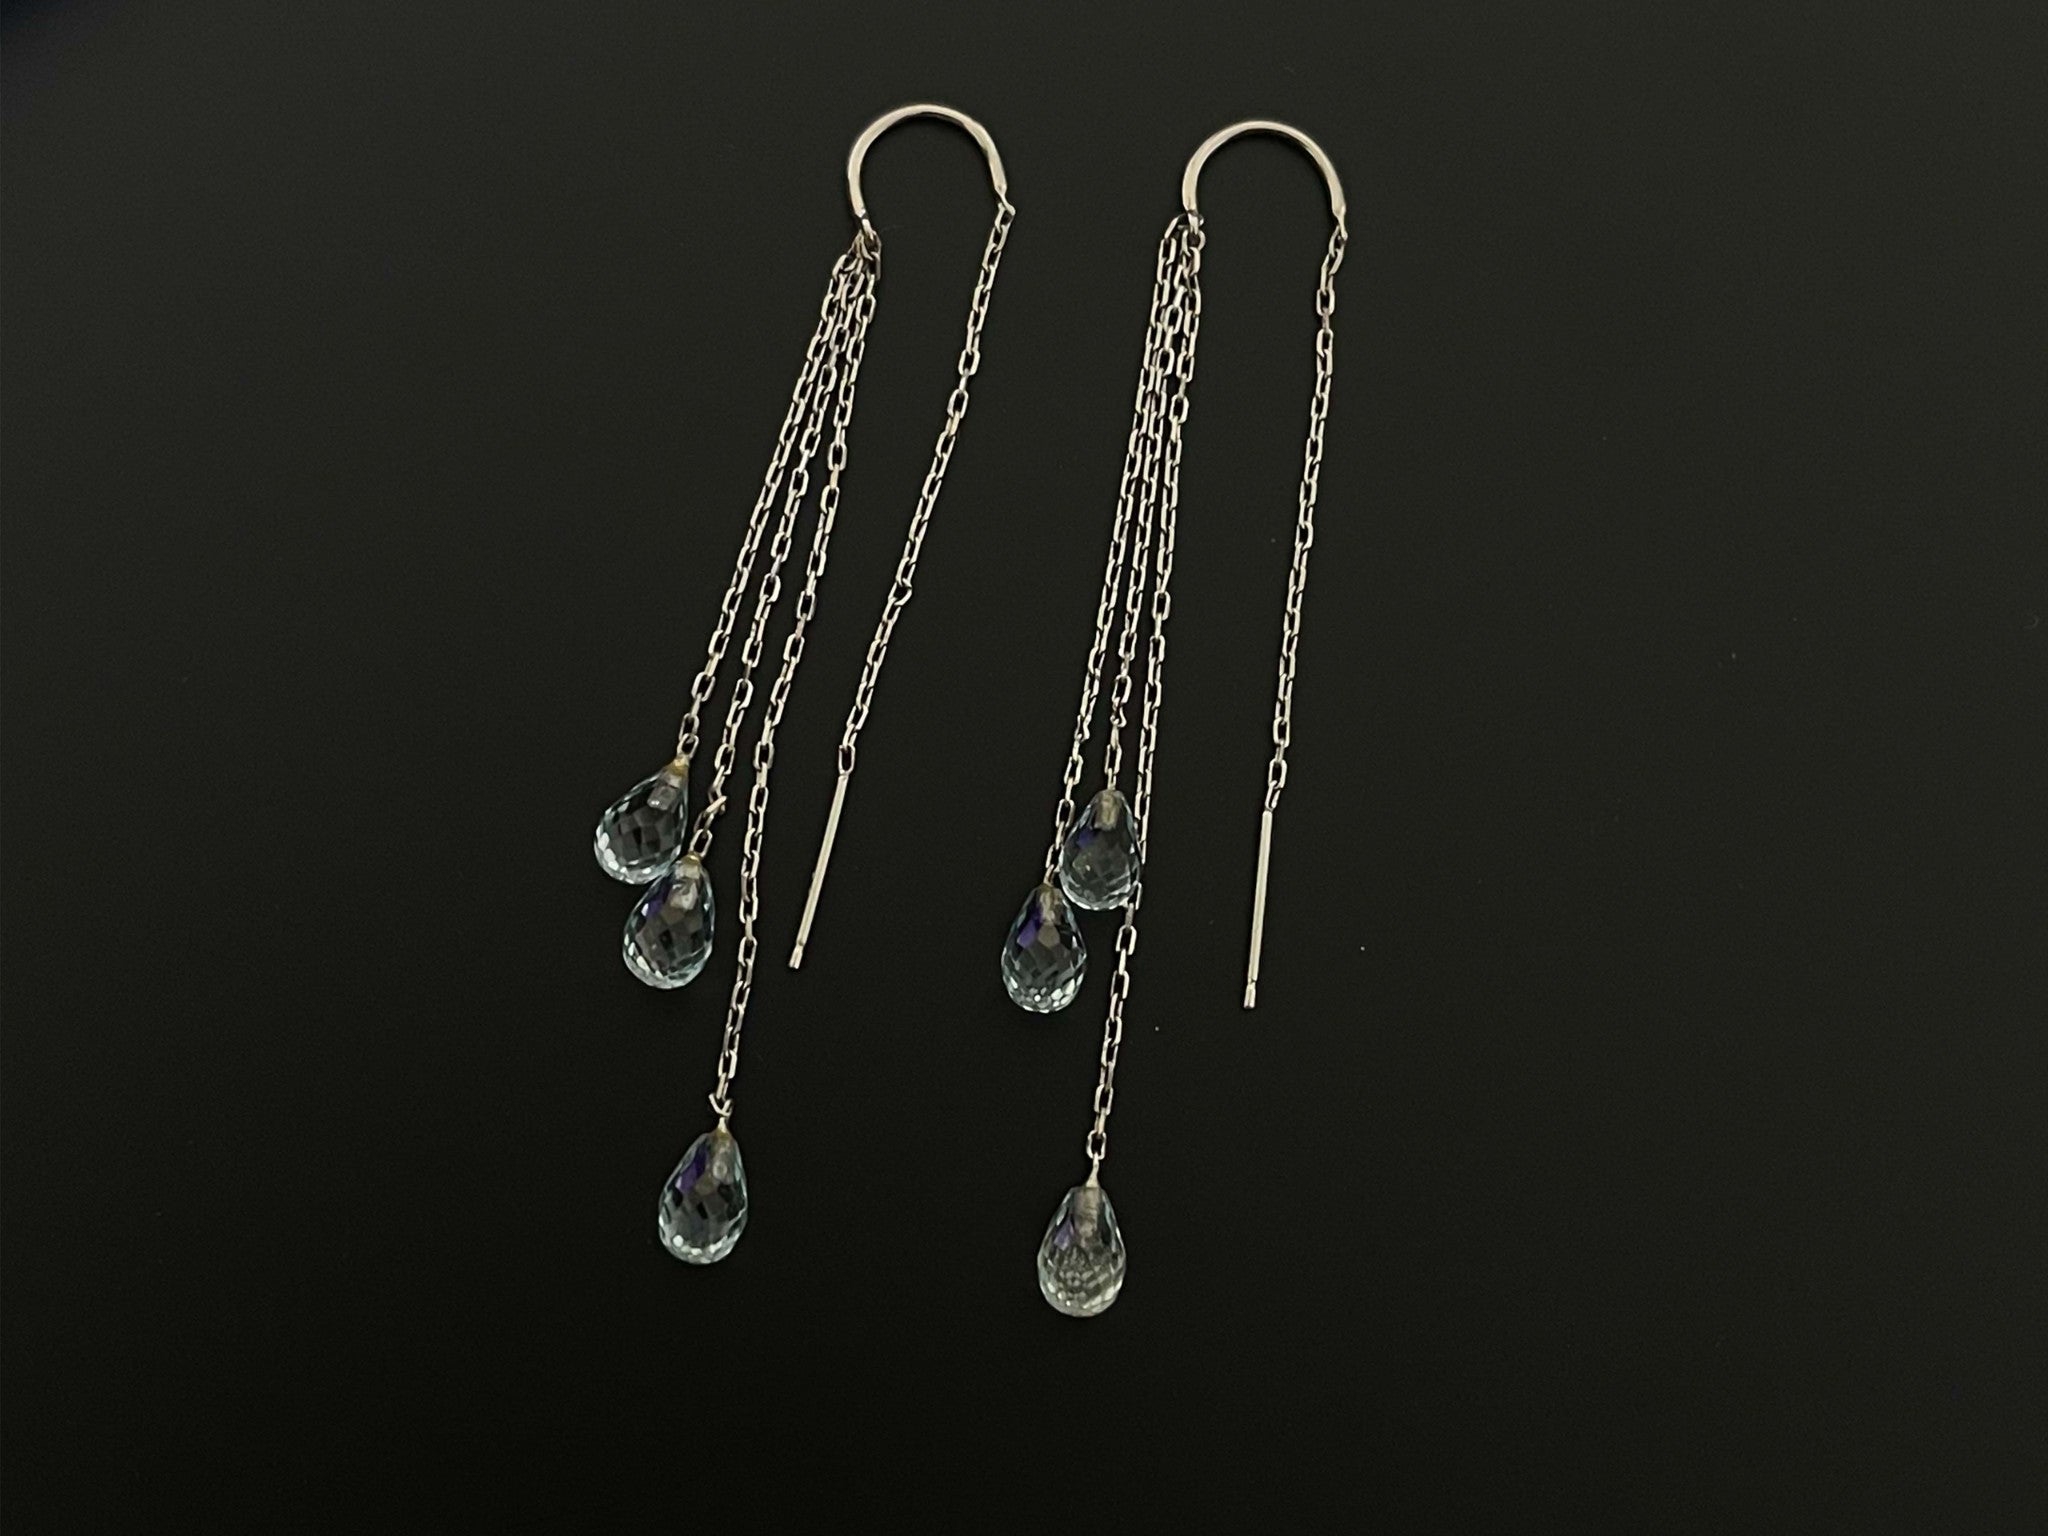 Briolette Cut Aquamarine Dangle Earrings in 14k White Gold